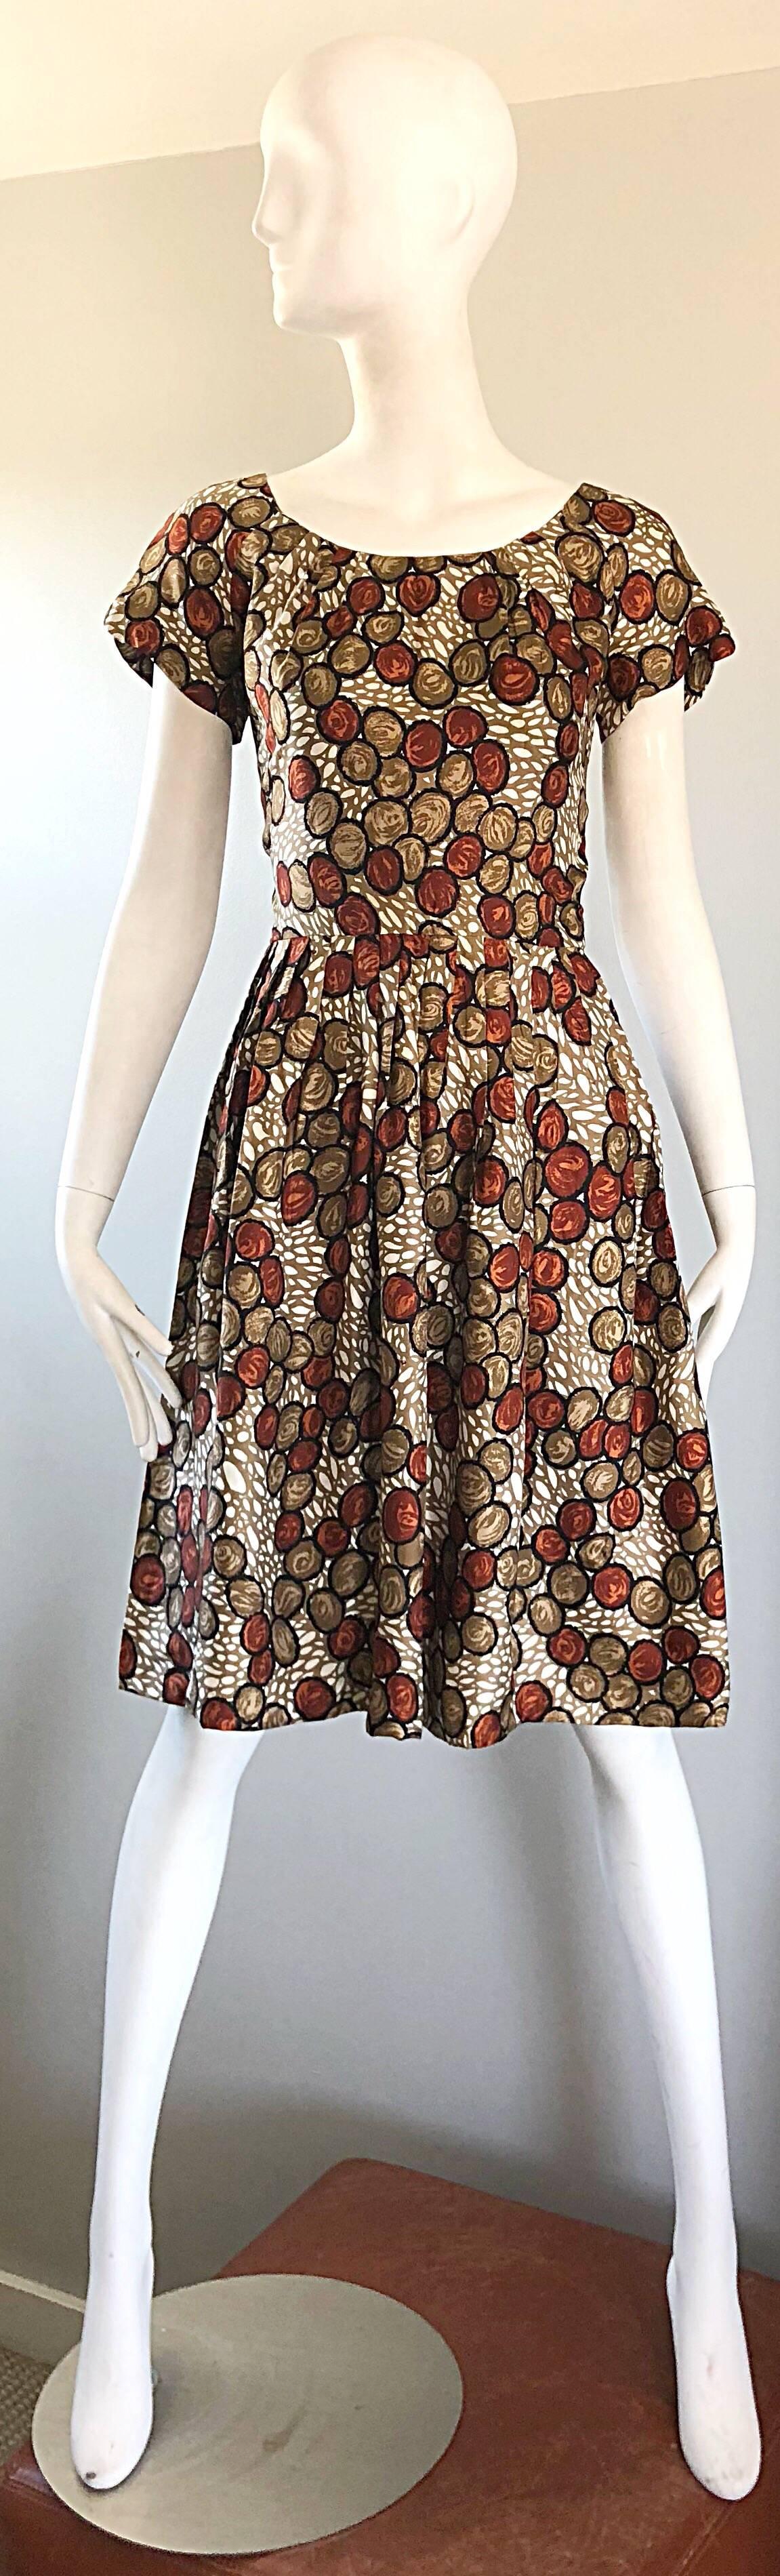 1950s Walnut Nut Print Fit n ' Flare Brown Beige Ivory Silk 50s Vintage Dress  9